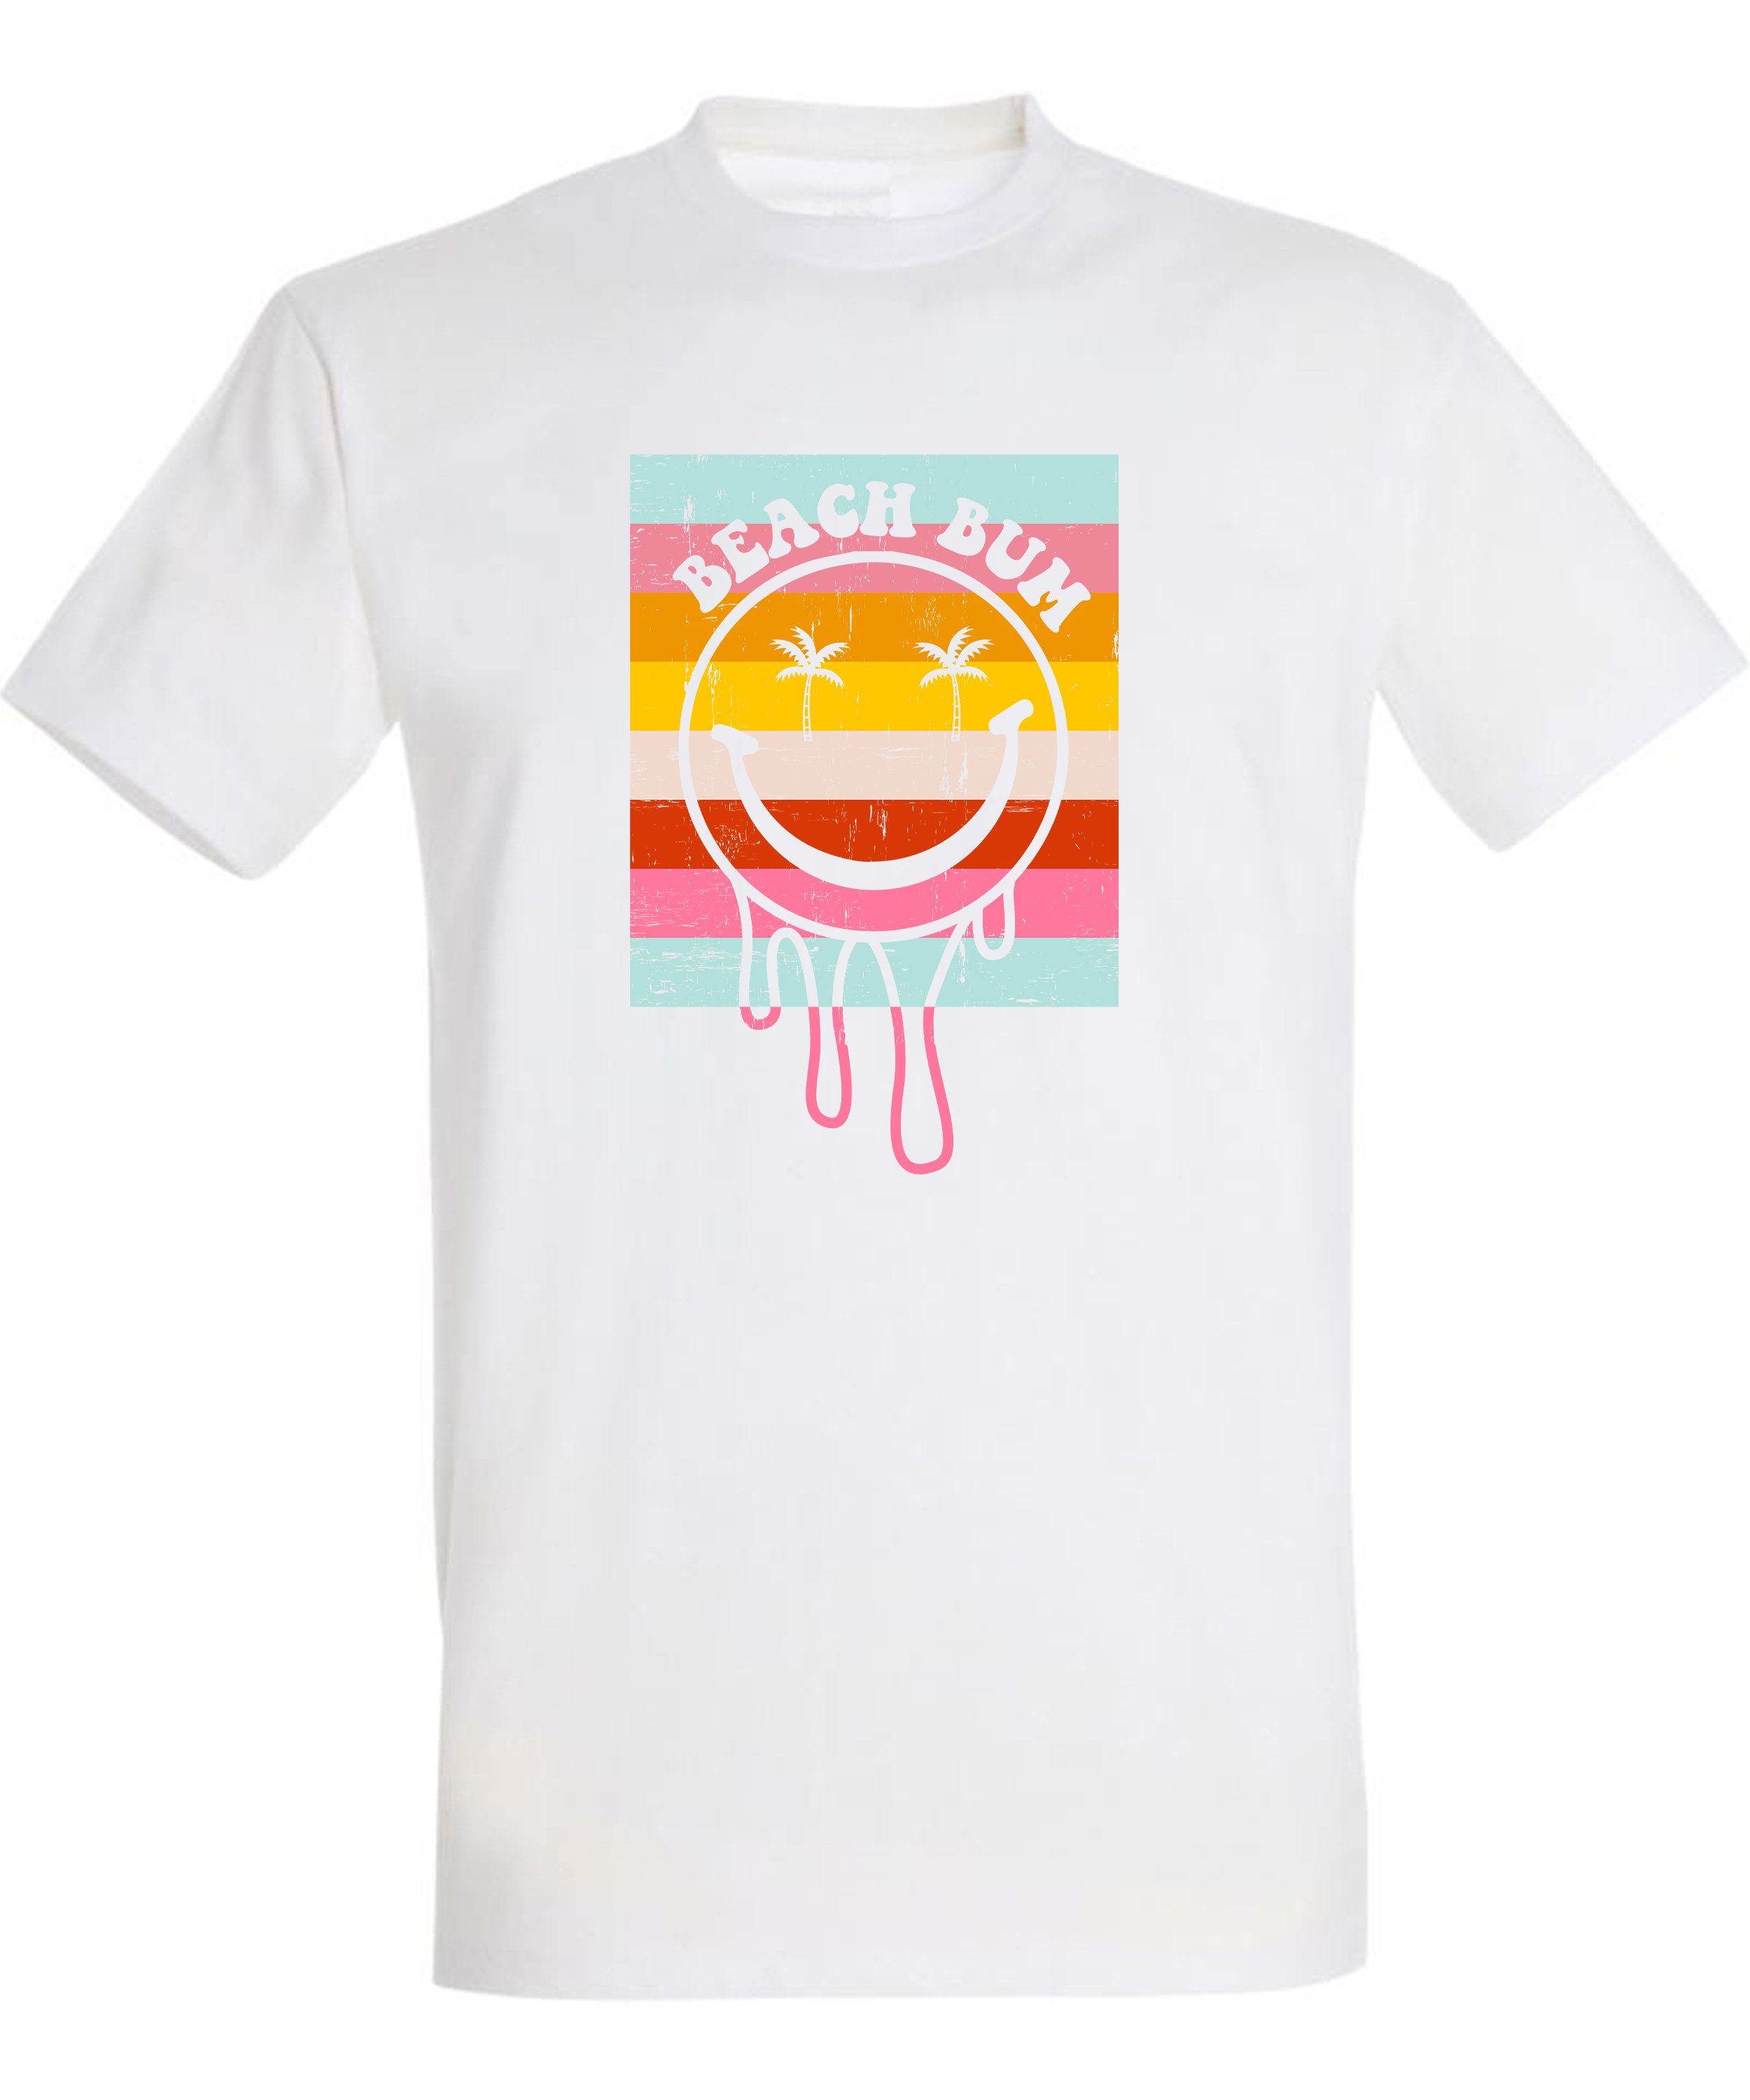 Regular Smiley - Smiley Baumwollshirt Beach T-Shirt Bum mit Fit, Bunter i291 MyDesign24 Print Aufdruck weiss Herren Shirt